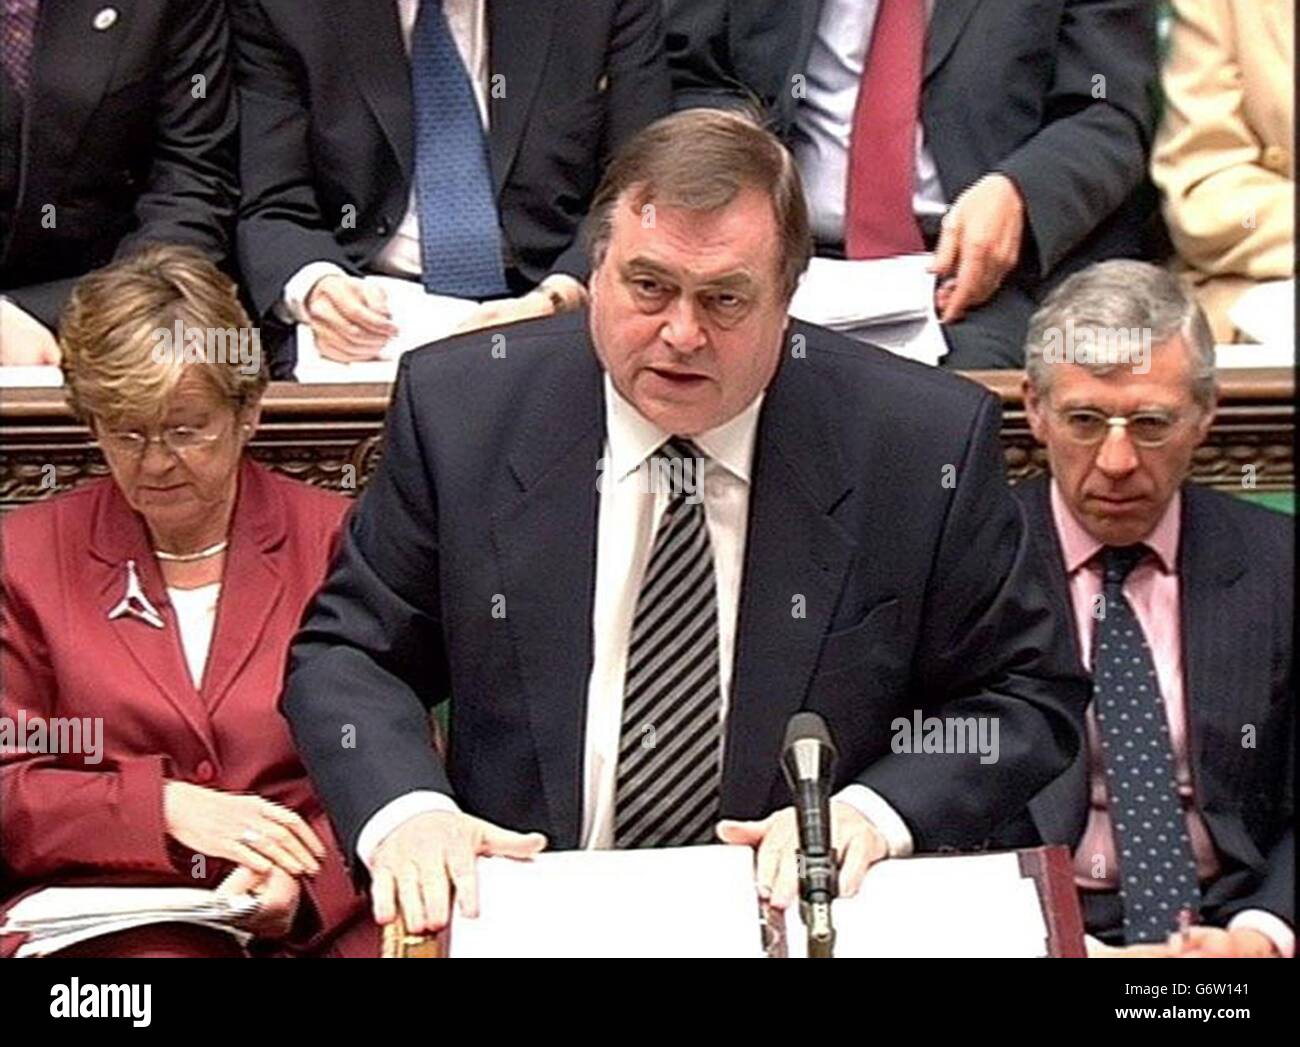 Deputy Prime Minister John Prescott speaks in the House of Commons, London, during Prime Minister's Questions. Stock Photo